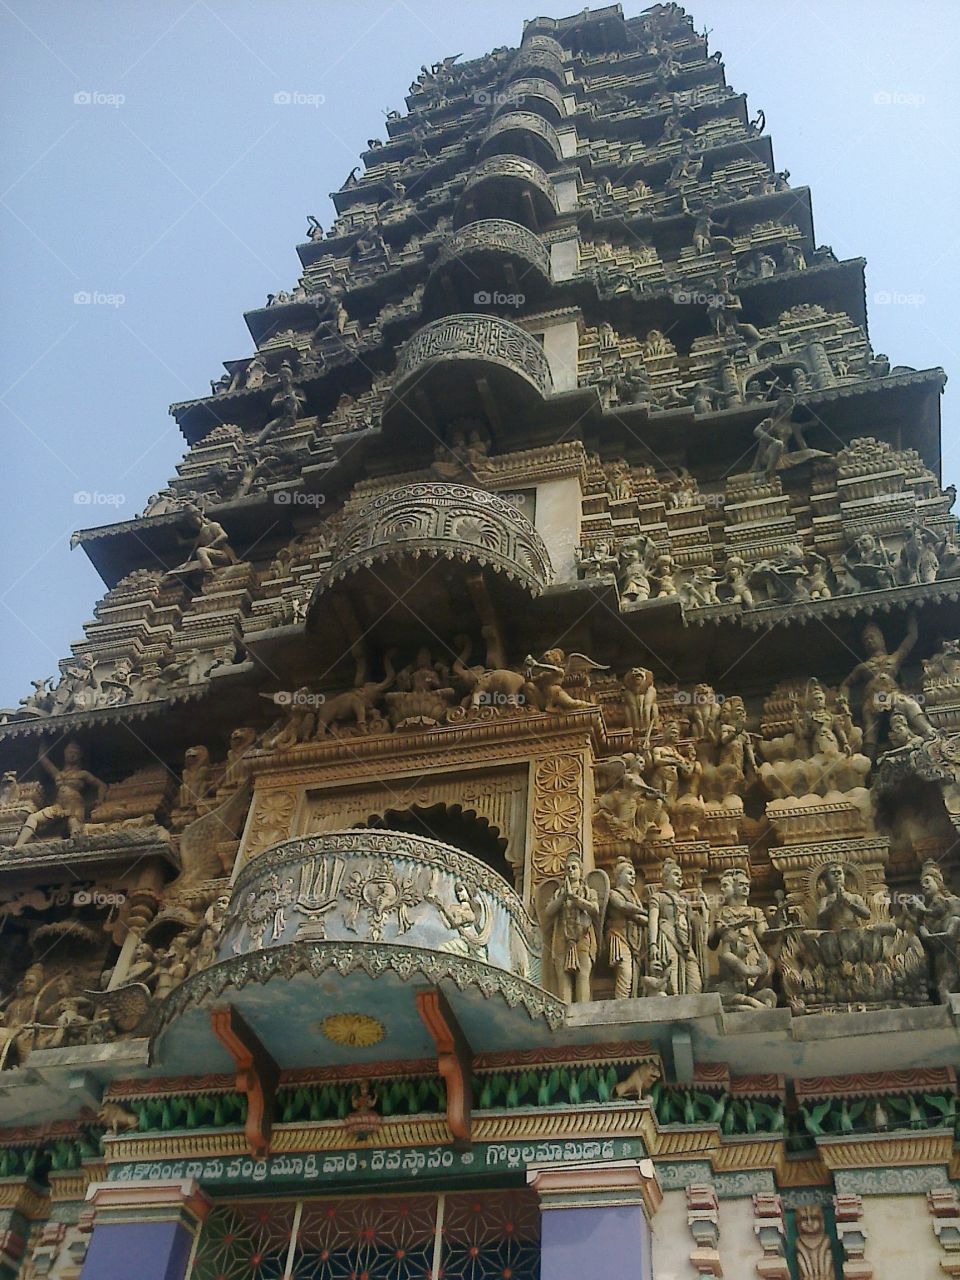 Kodhandarama temple